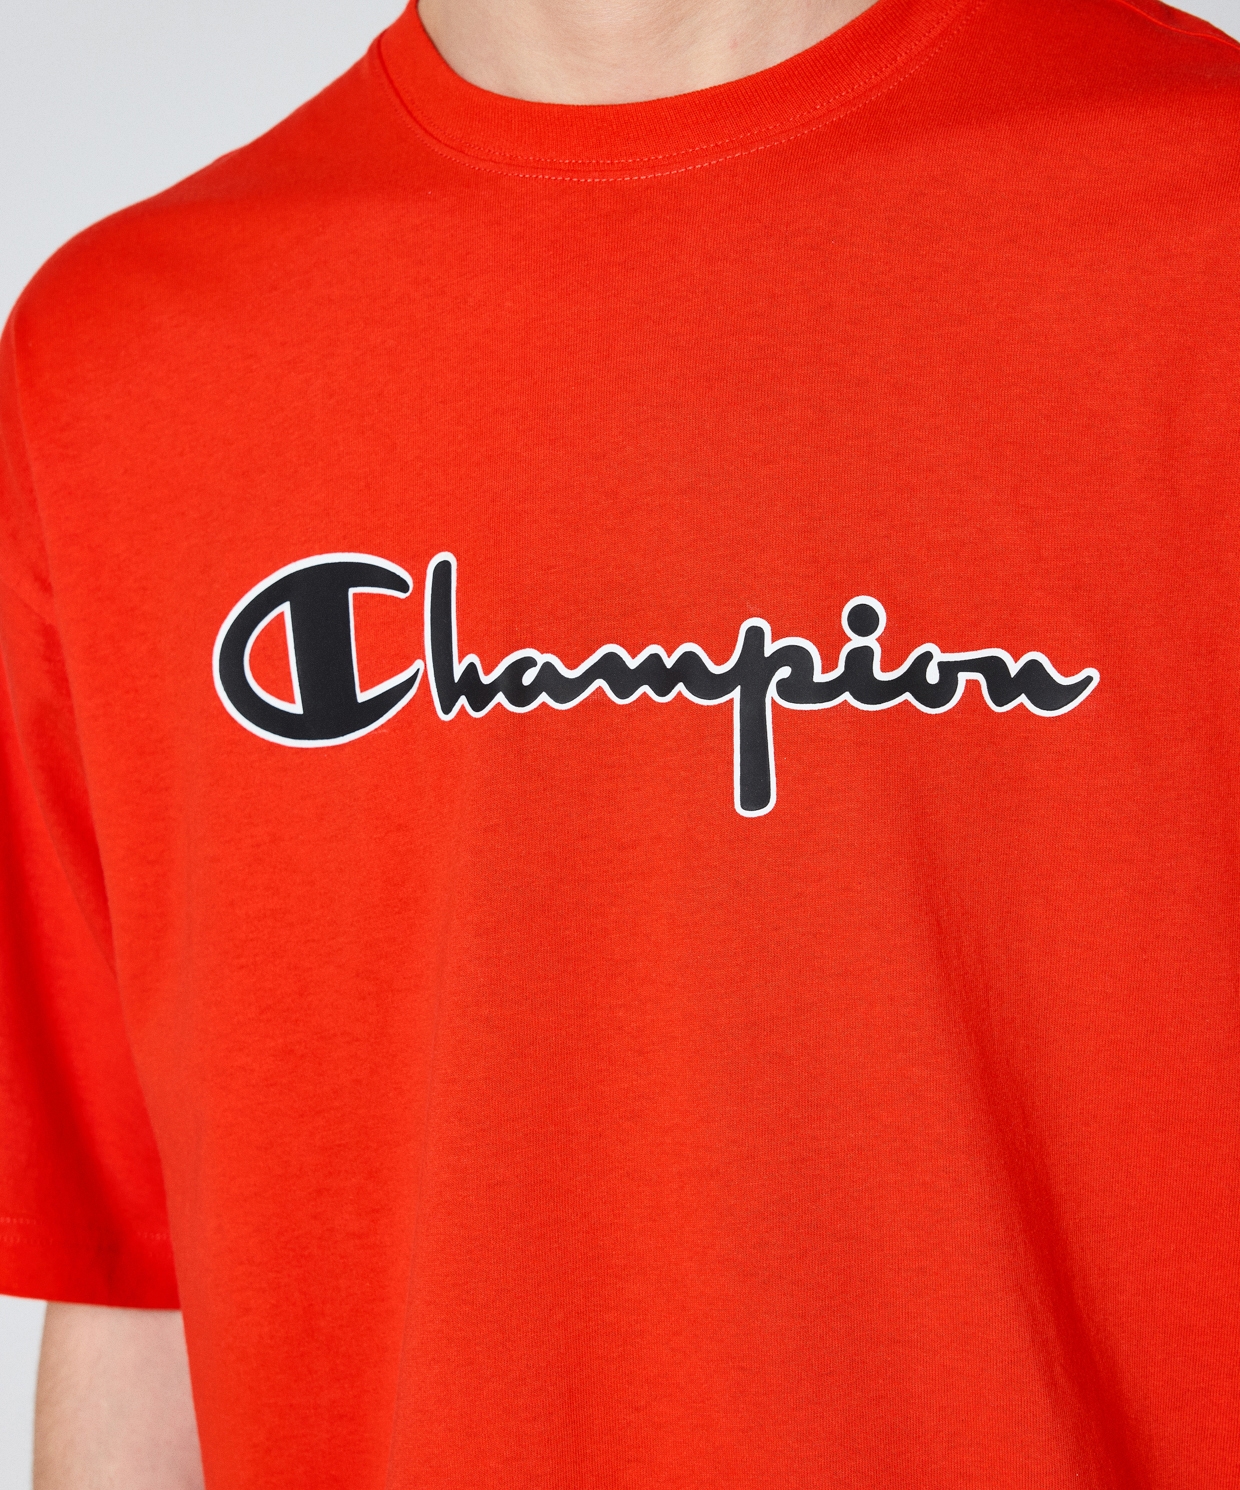 resm Champion Glen Rice T T-Shirt